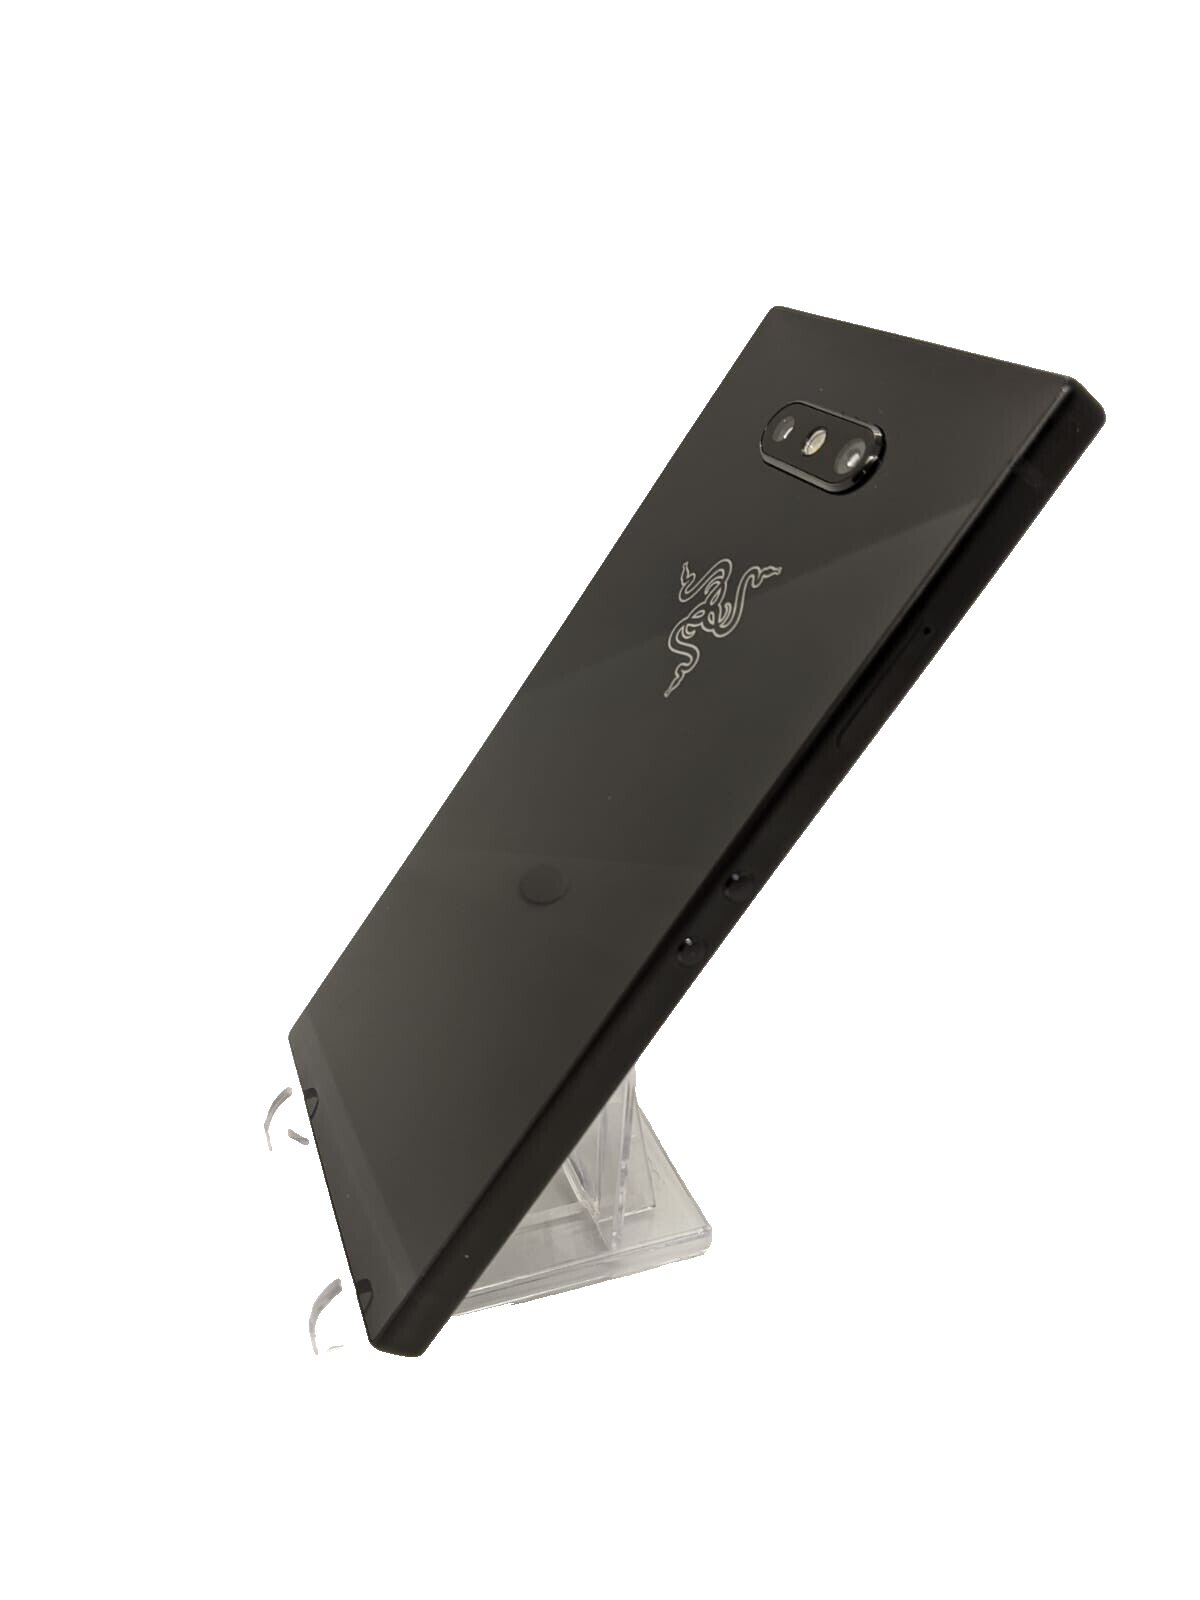 Razer Phone 2 64GB Mirror Black (AT&T) (Single SIM) RZ35-0259